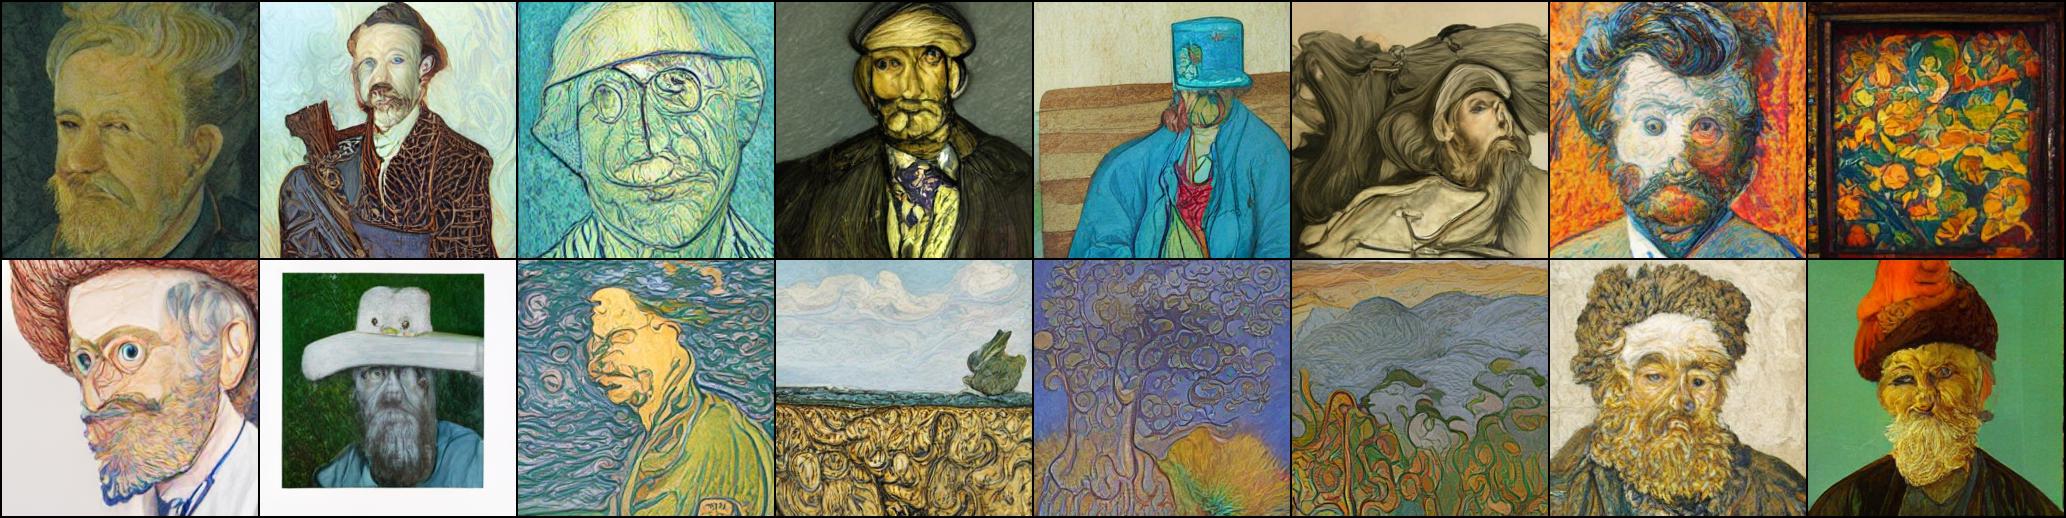 a painting by Vincent Van Gogh_temp_1.0_top_k_1024_top_p_0.95.jpg